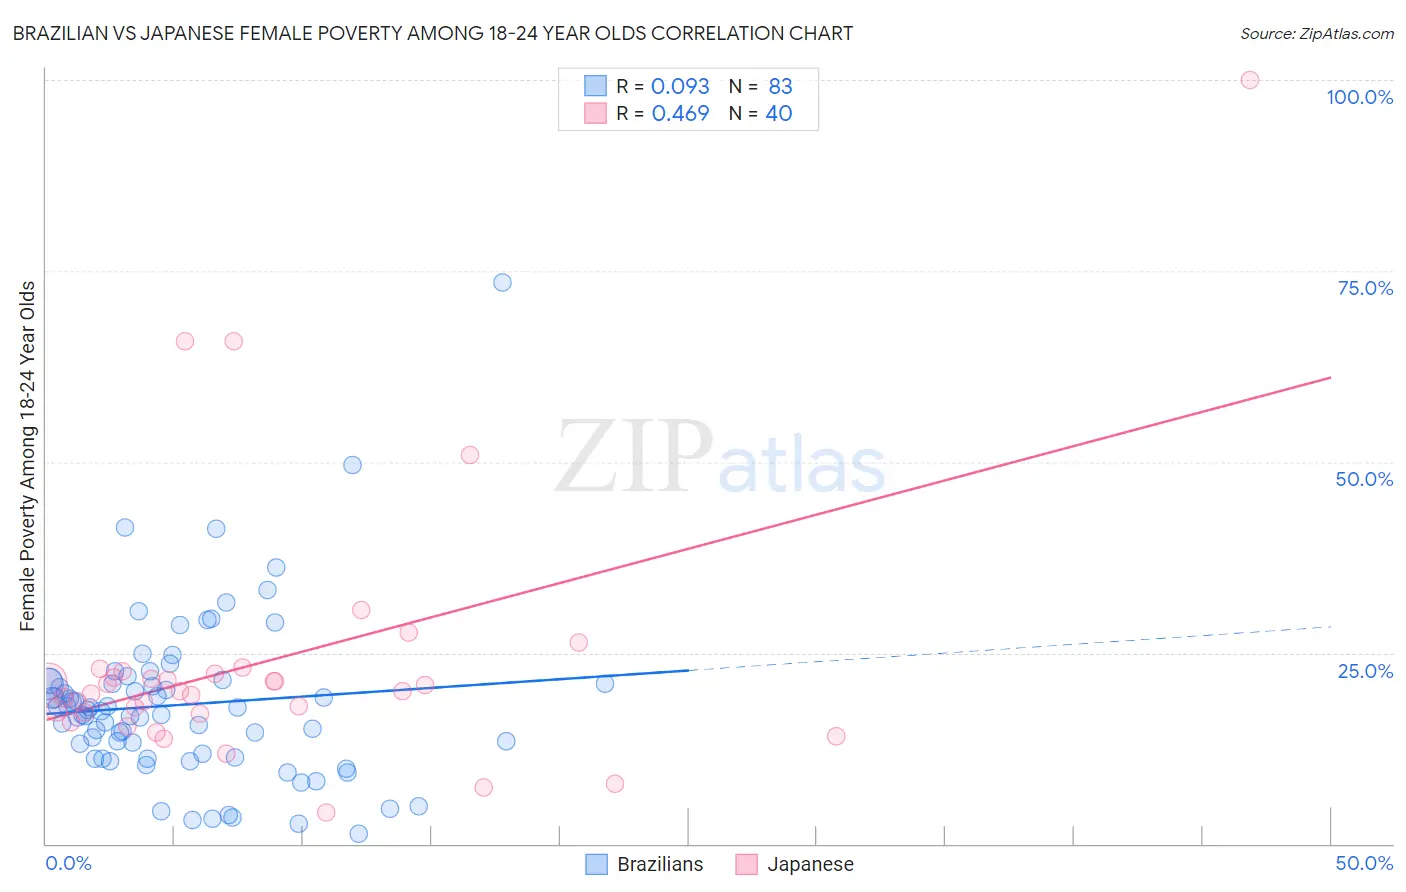 Brazilian vs Japanese Female Poverty Among 18-24 Year Olds